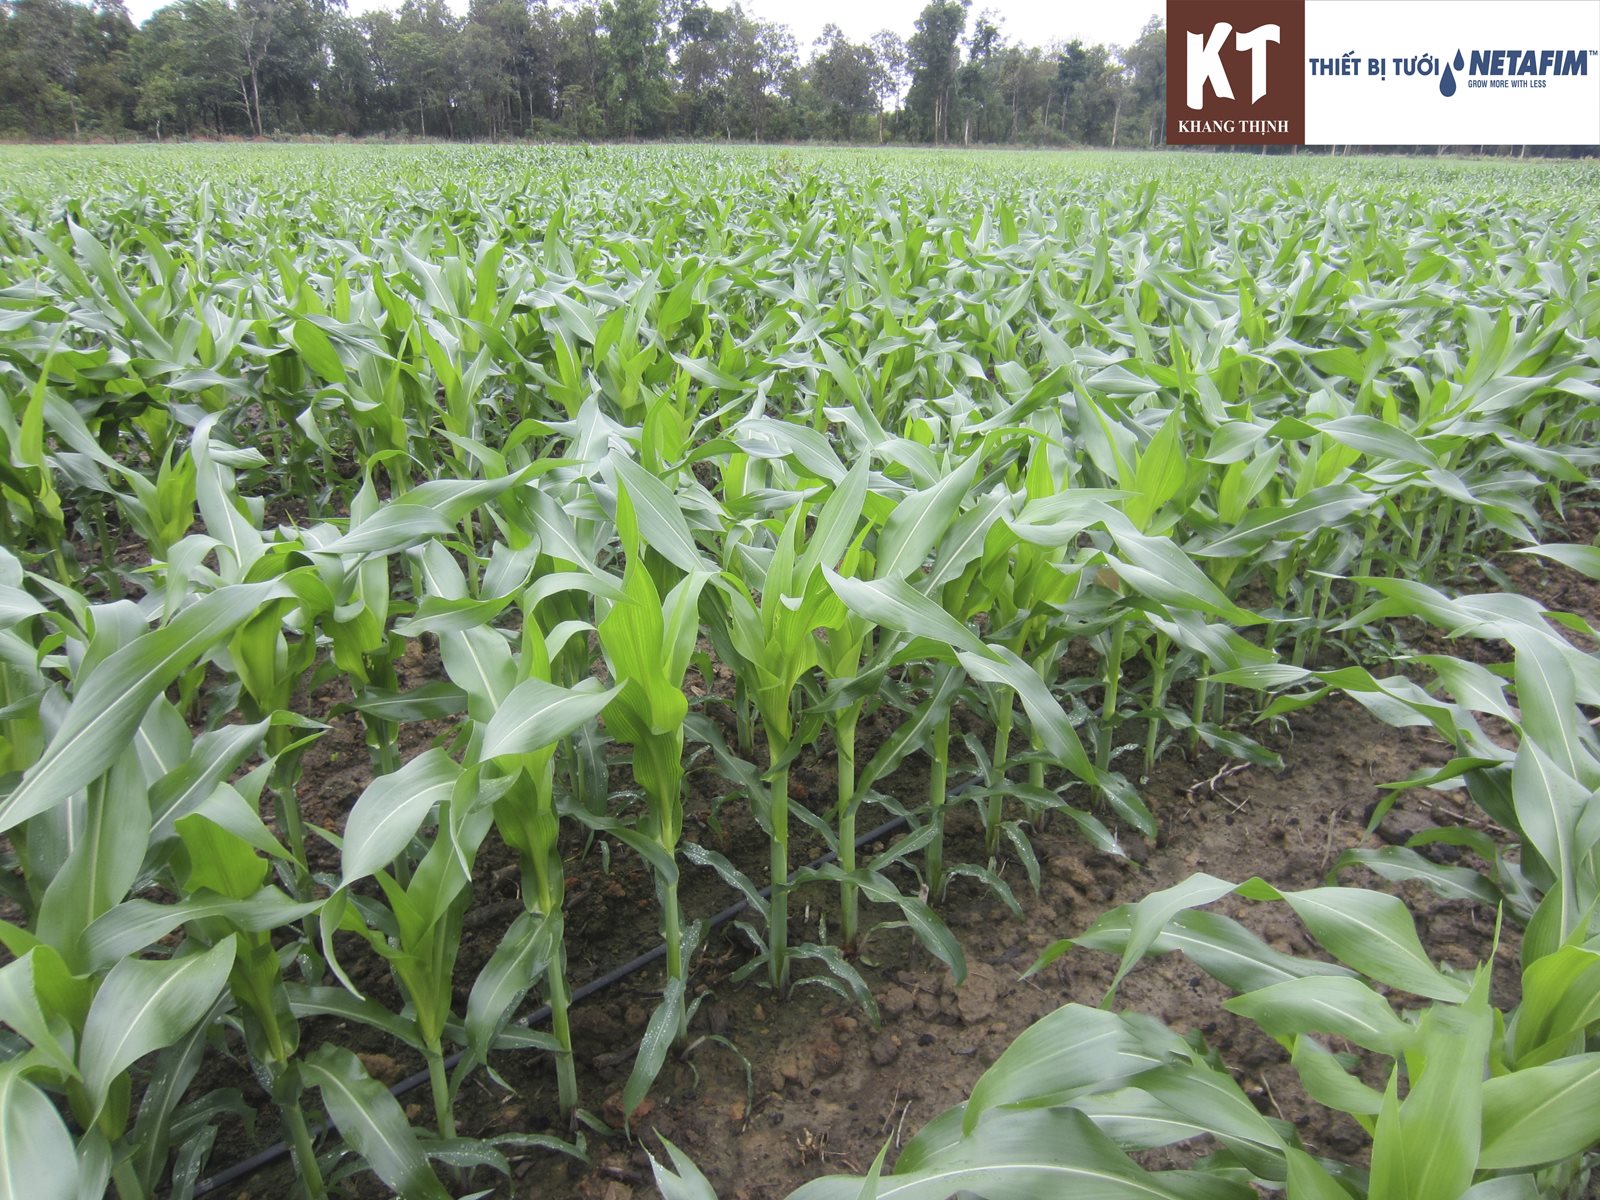 Drip irrigation for sugar cane – how did NETAFIM do it?